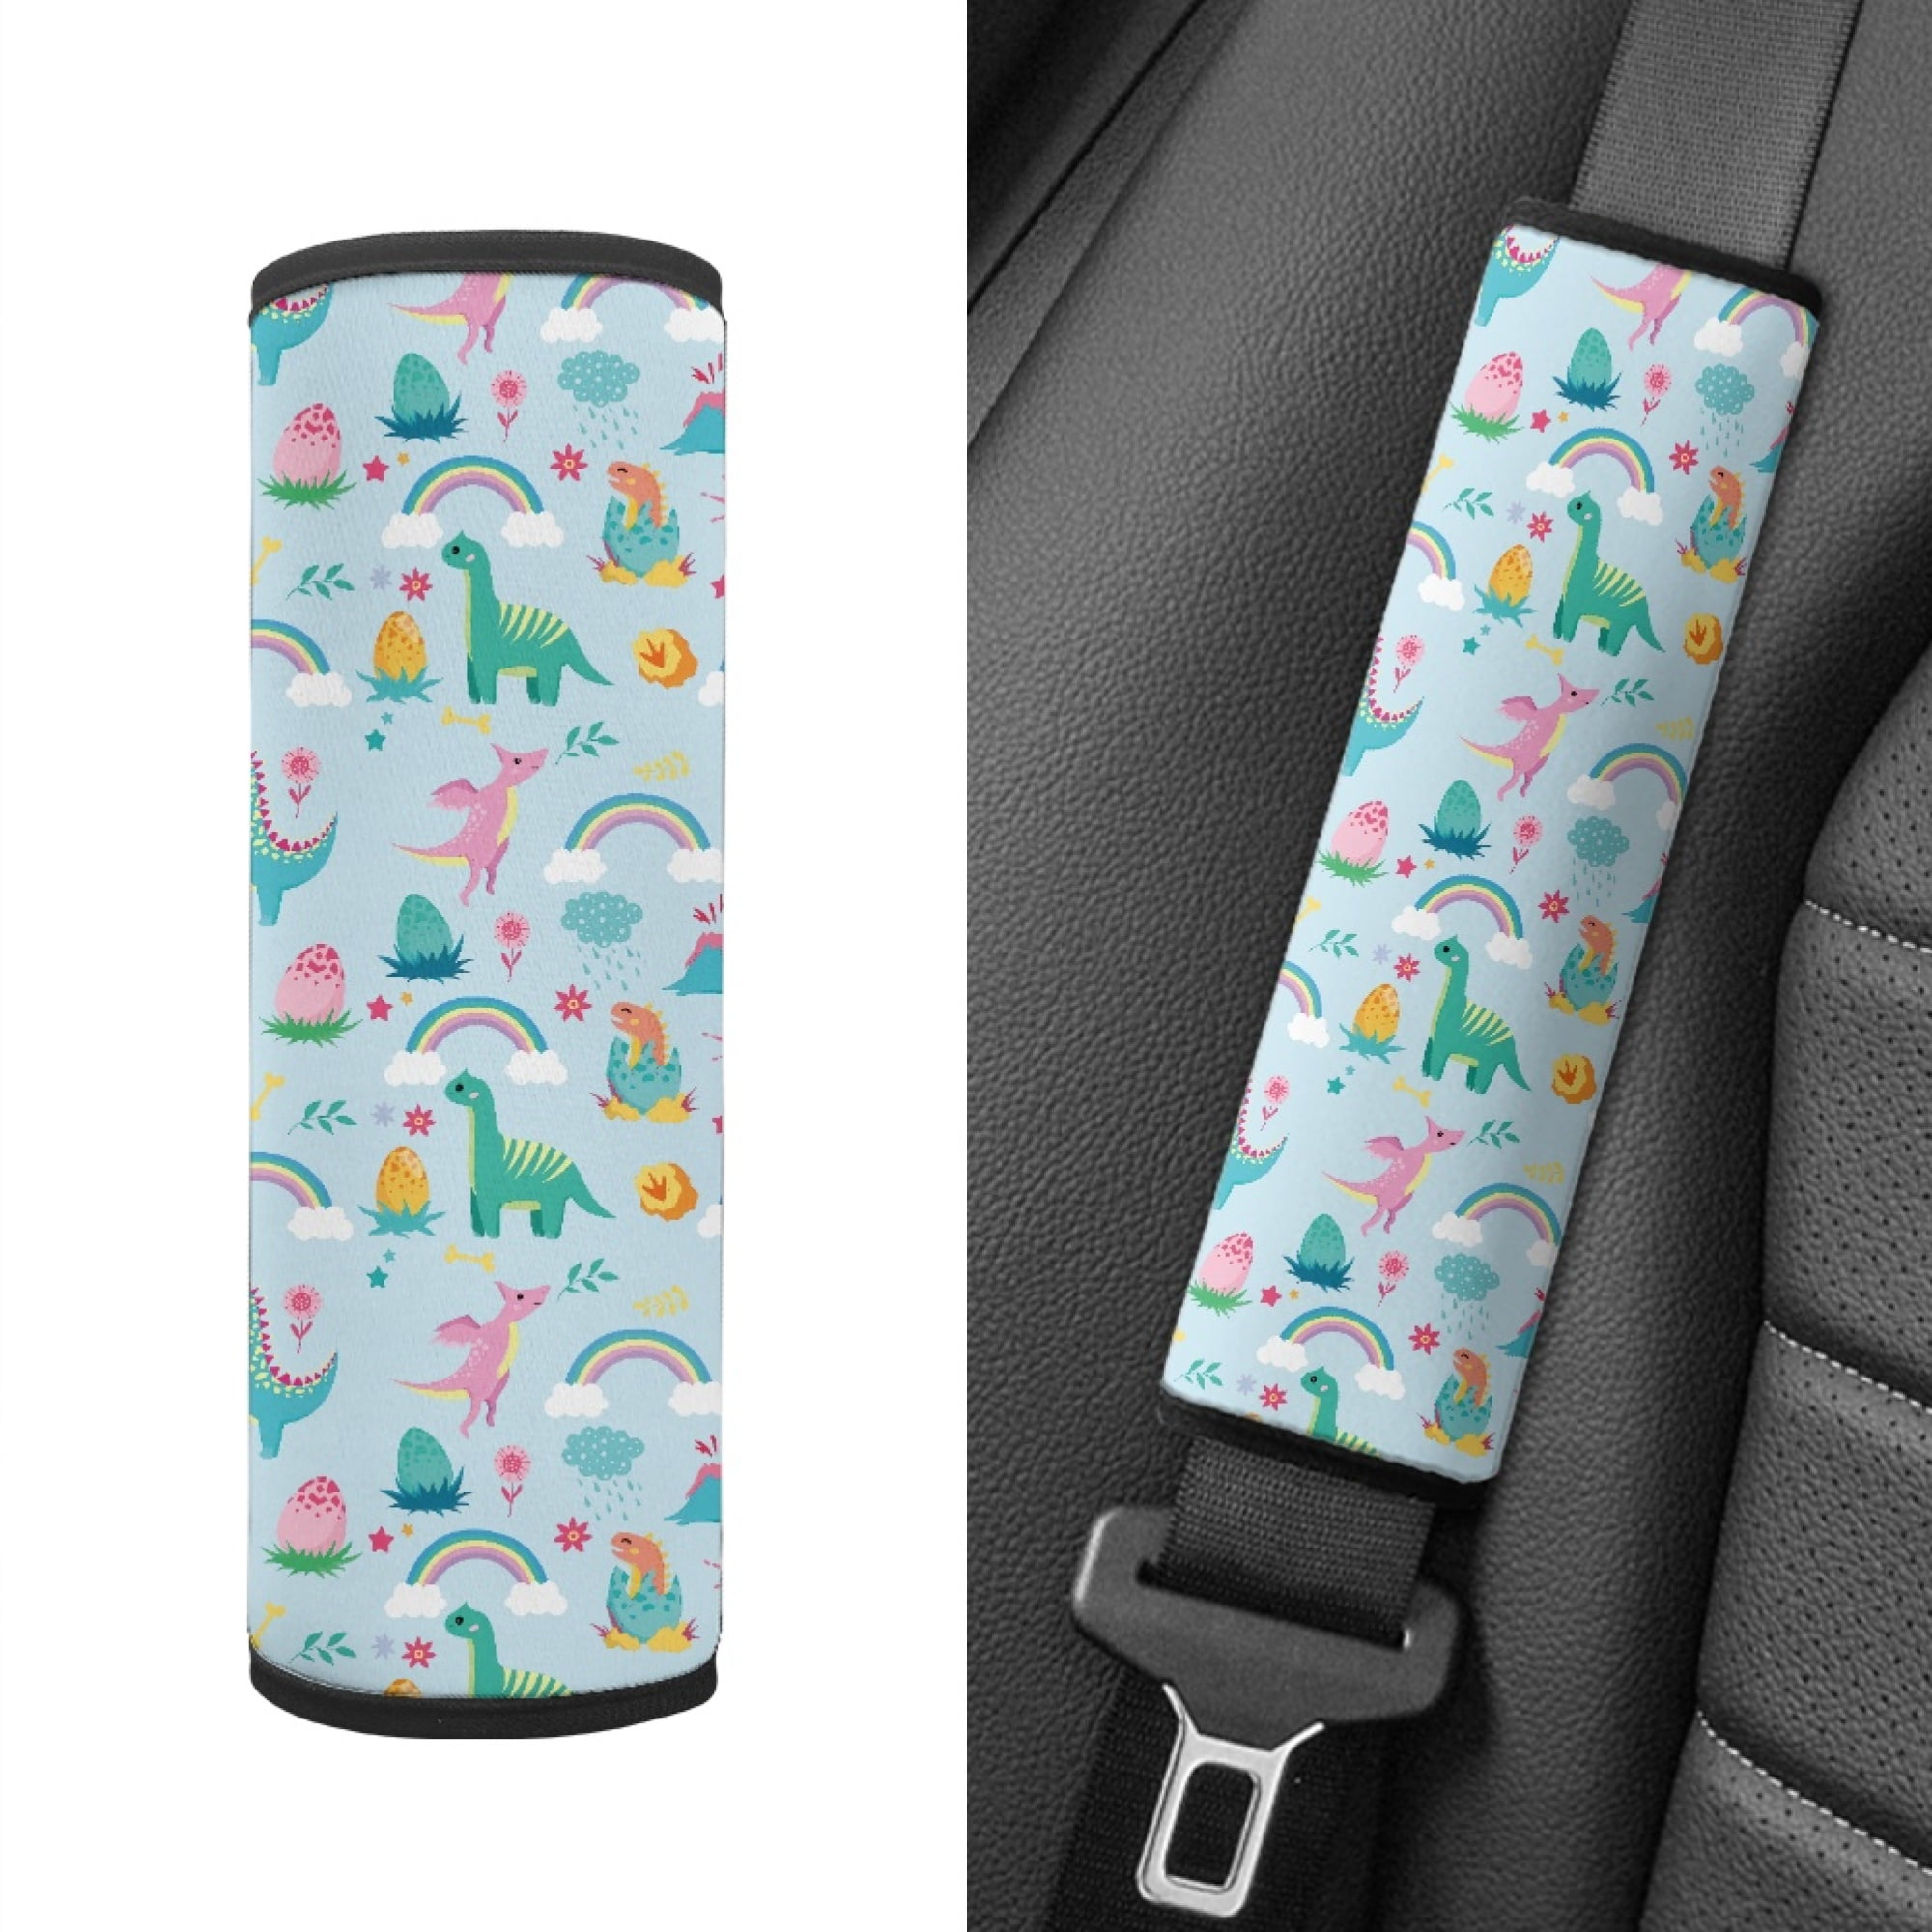 Seat Belt Cover Pad, Dinosuar Seatbelt Adjuster & Covers for Kids, Travel  Cute Cartoon Child Car